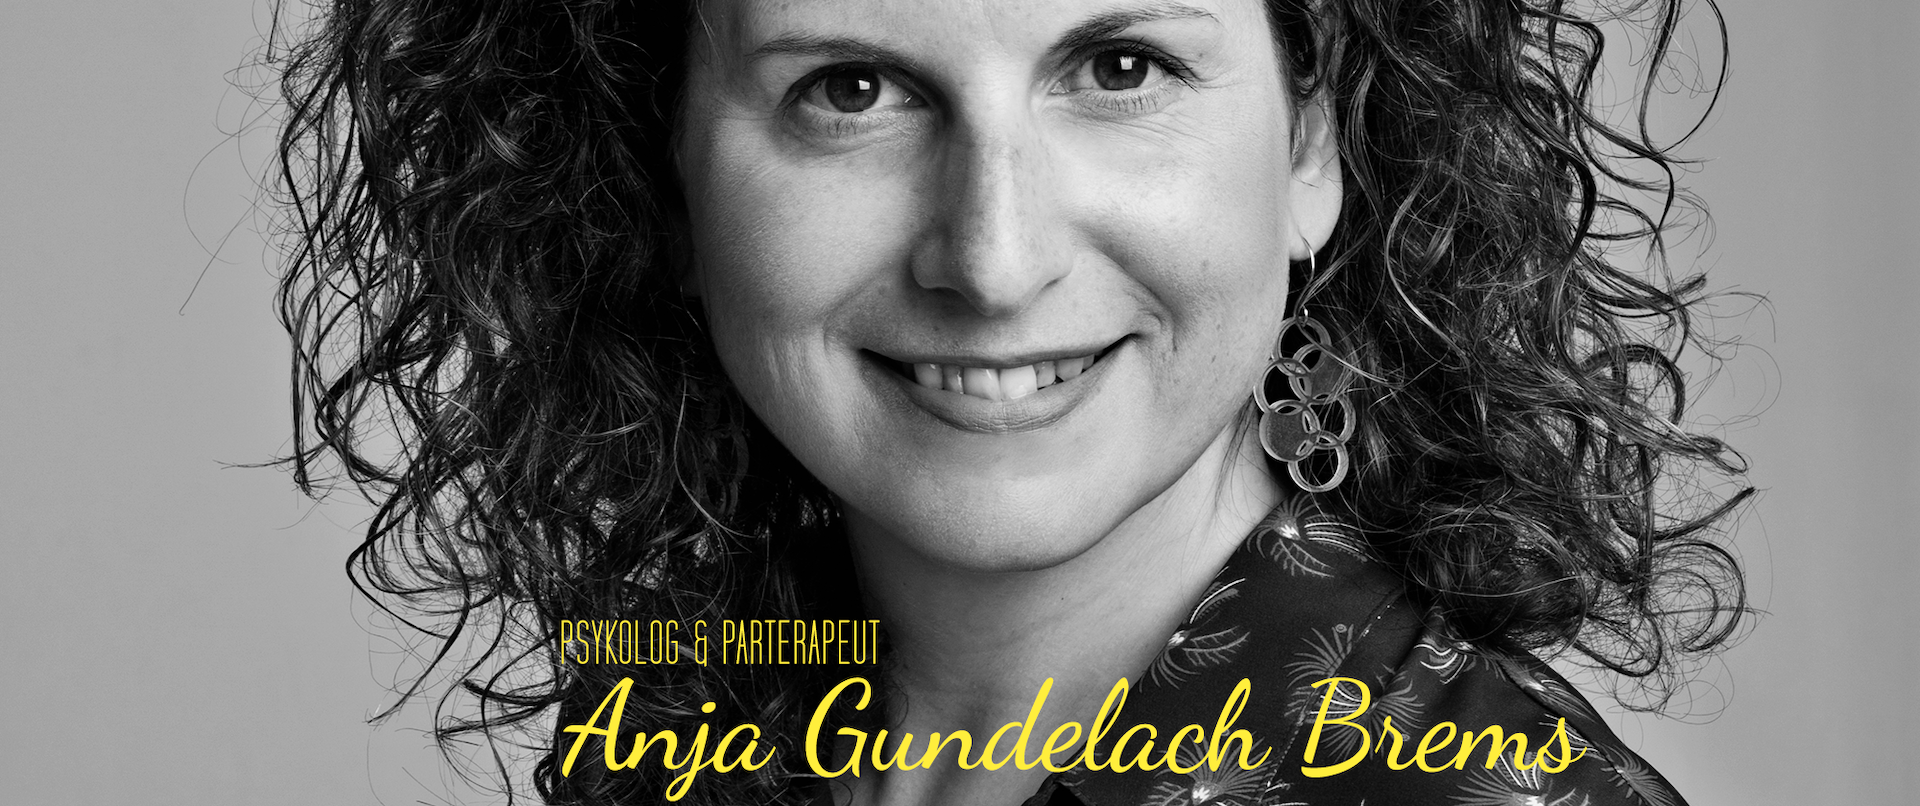 Psykolog & parterapeut Anja Gundelach Brems